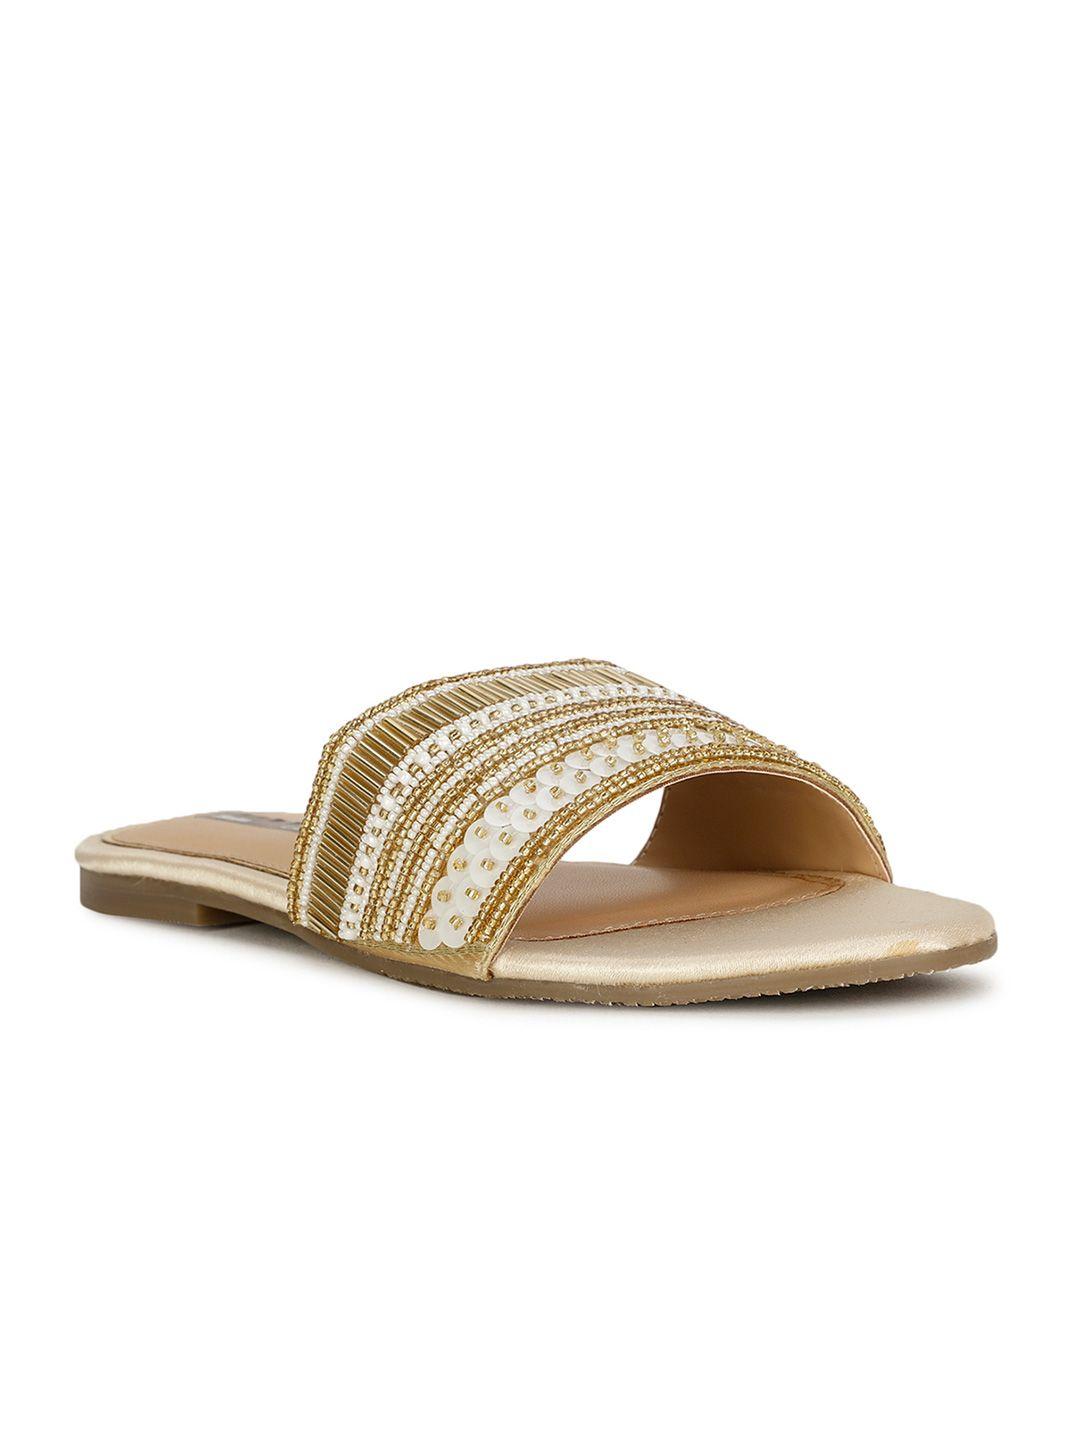 bata gold coloured embellished open toe flats